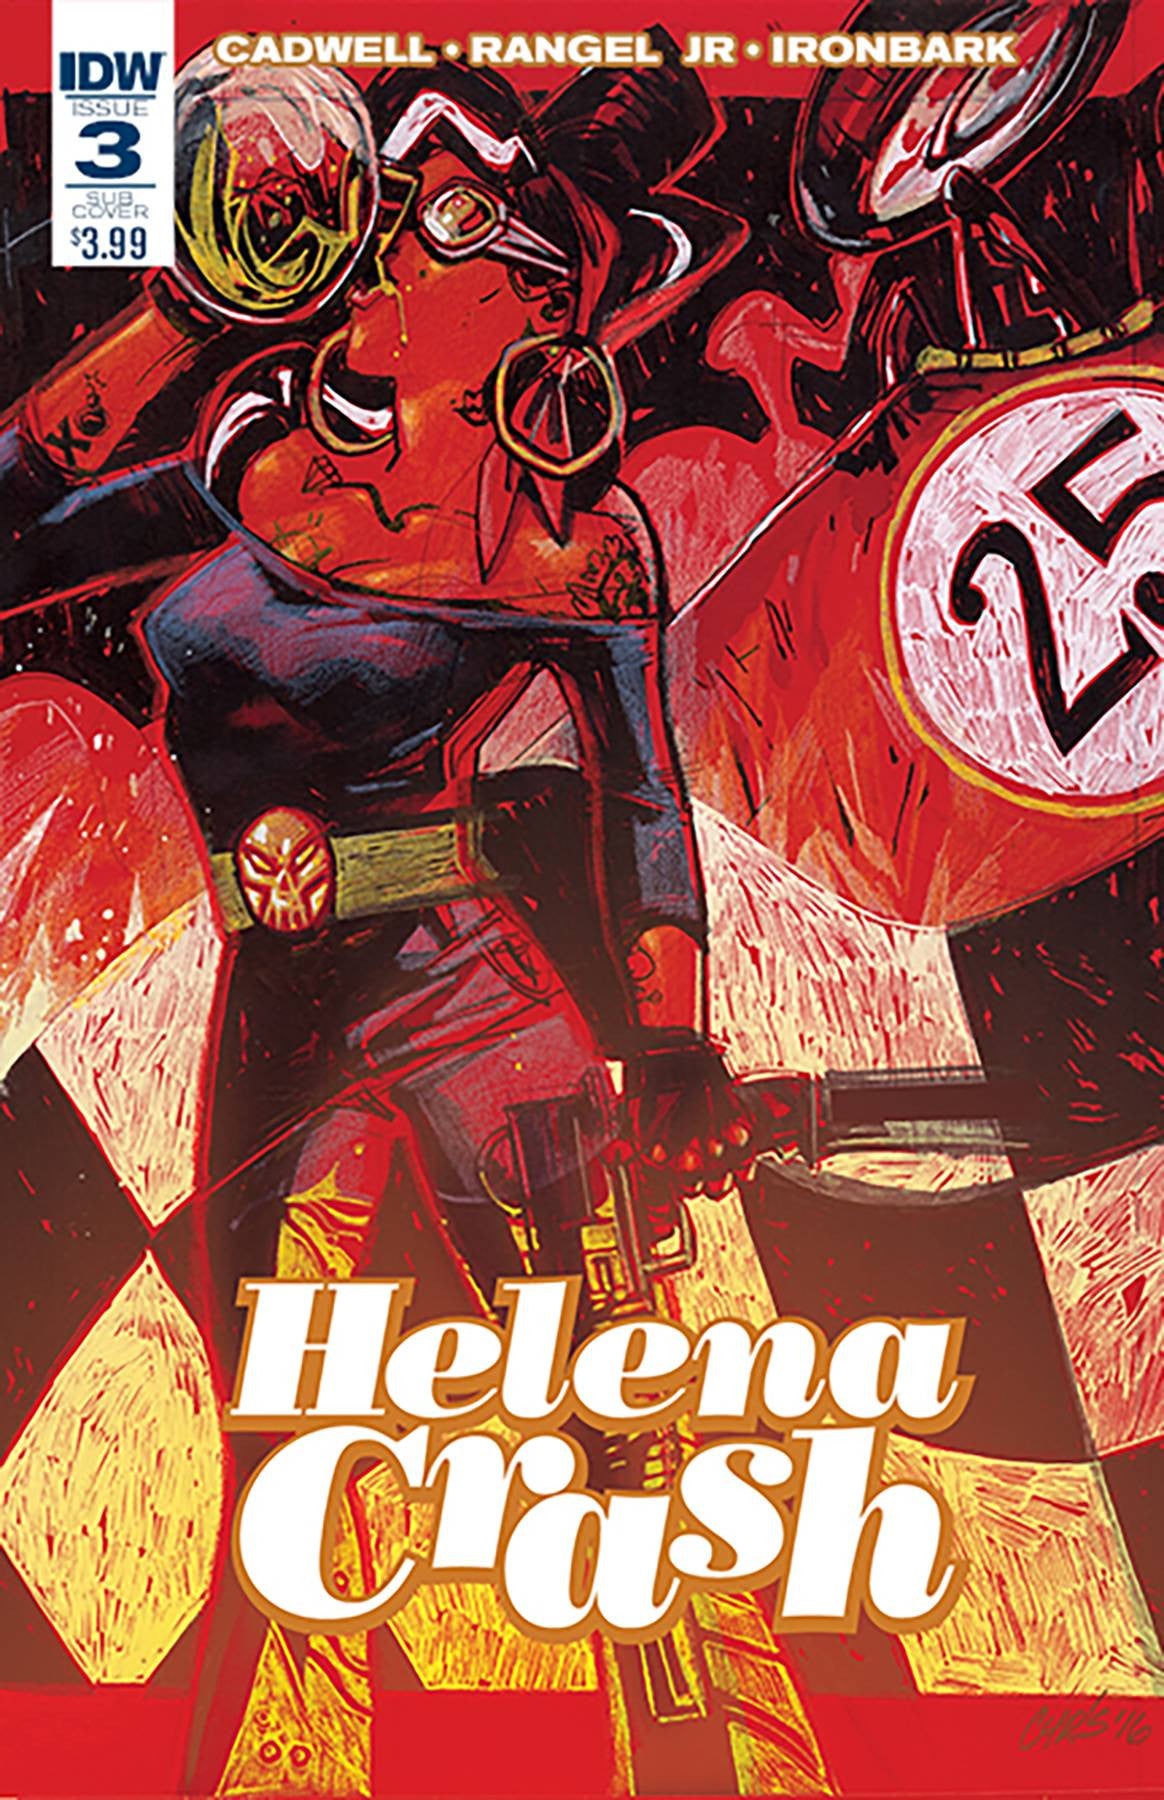 HELENA CRASH #3 (OF 4) SUBSCRIPTION VAR COVER